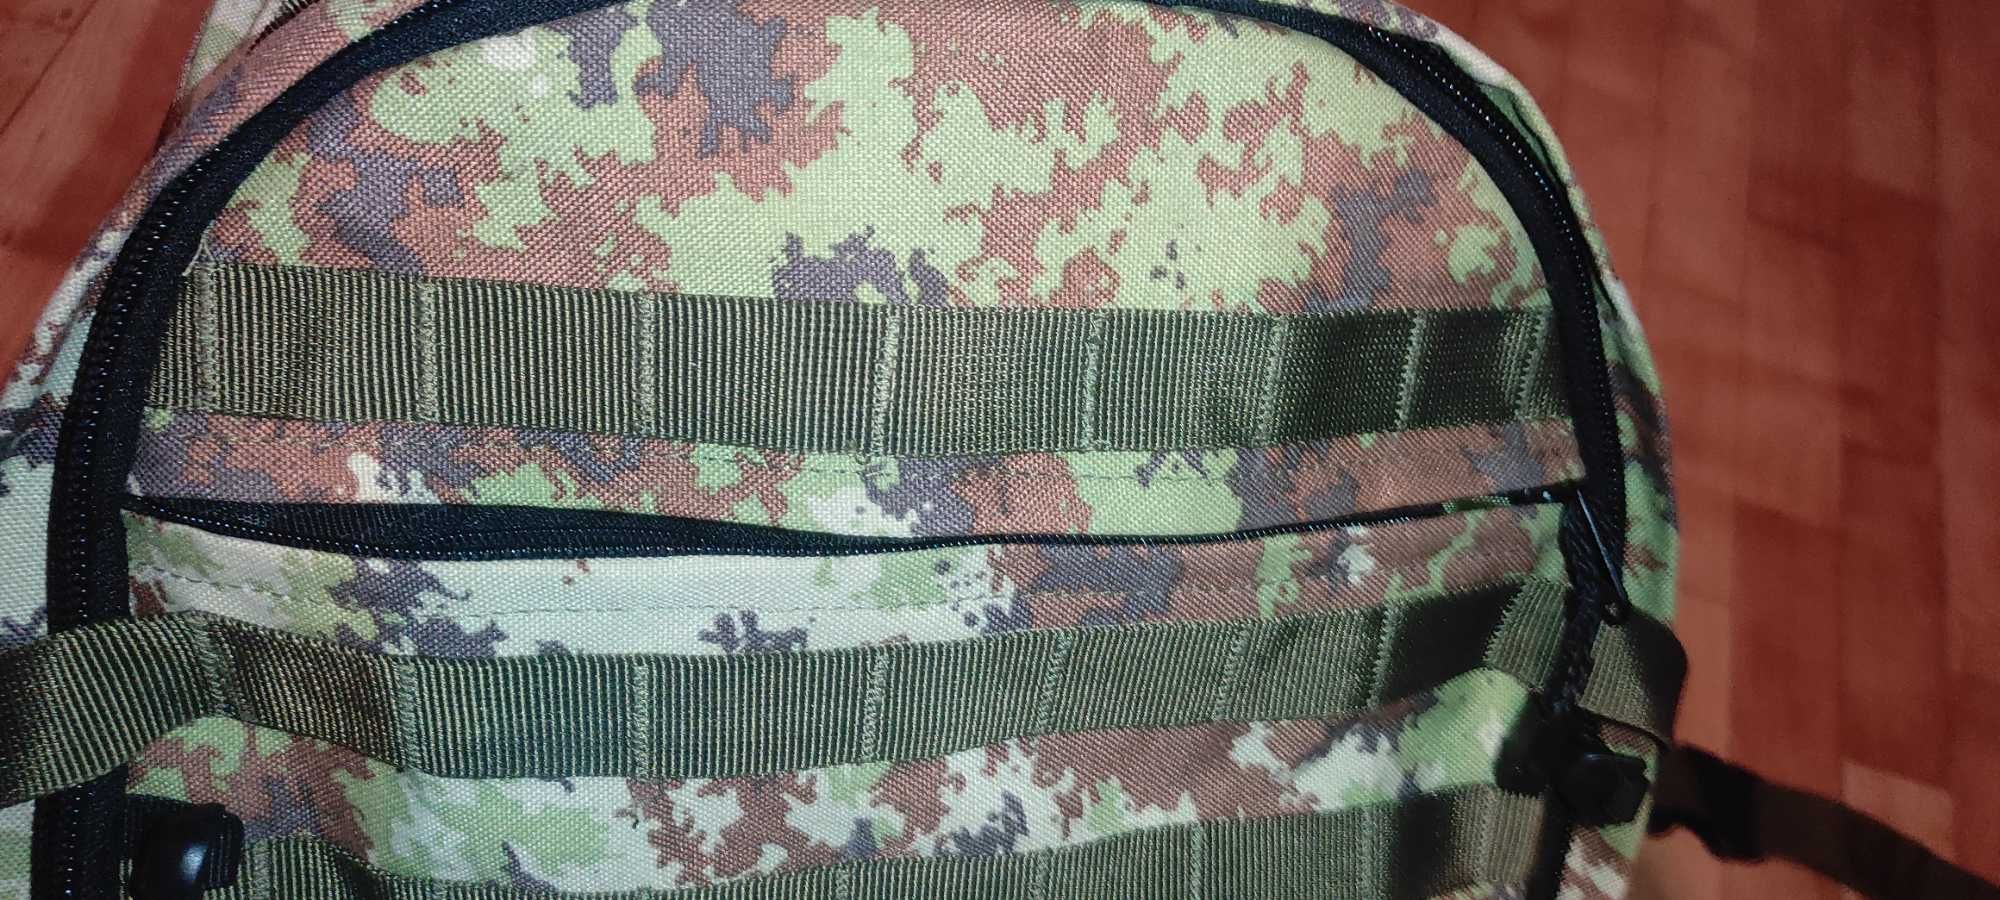 Plecak armii włoskiej vegetato 45 L- plus gratisy